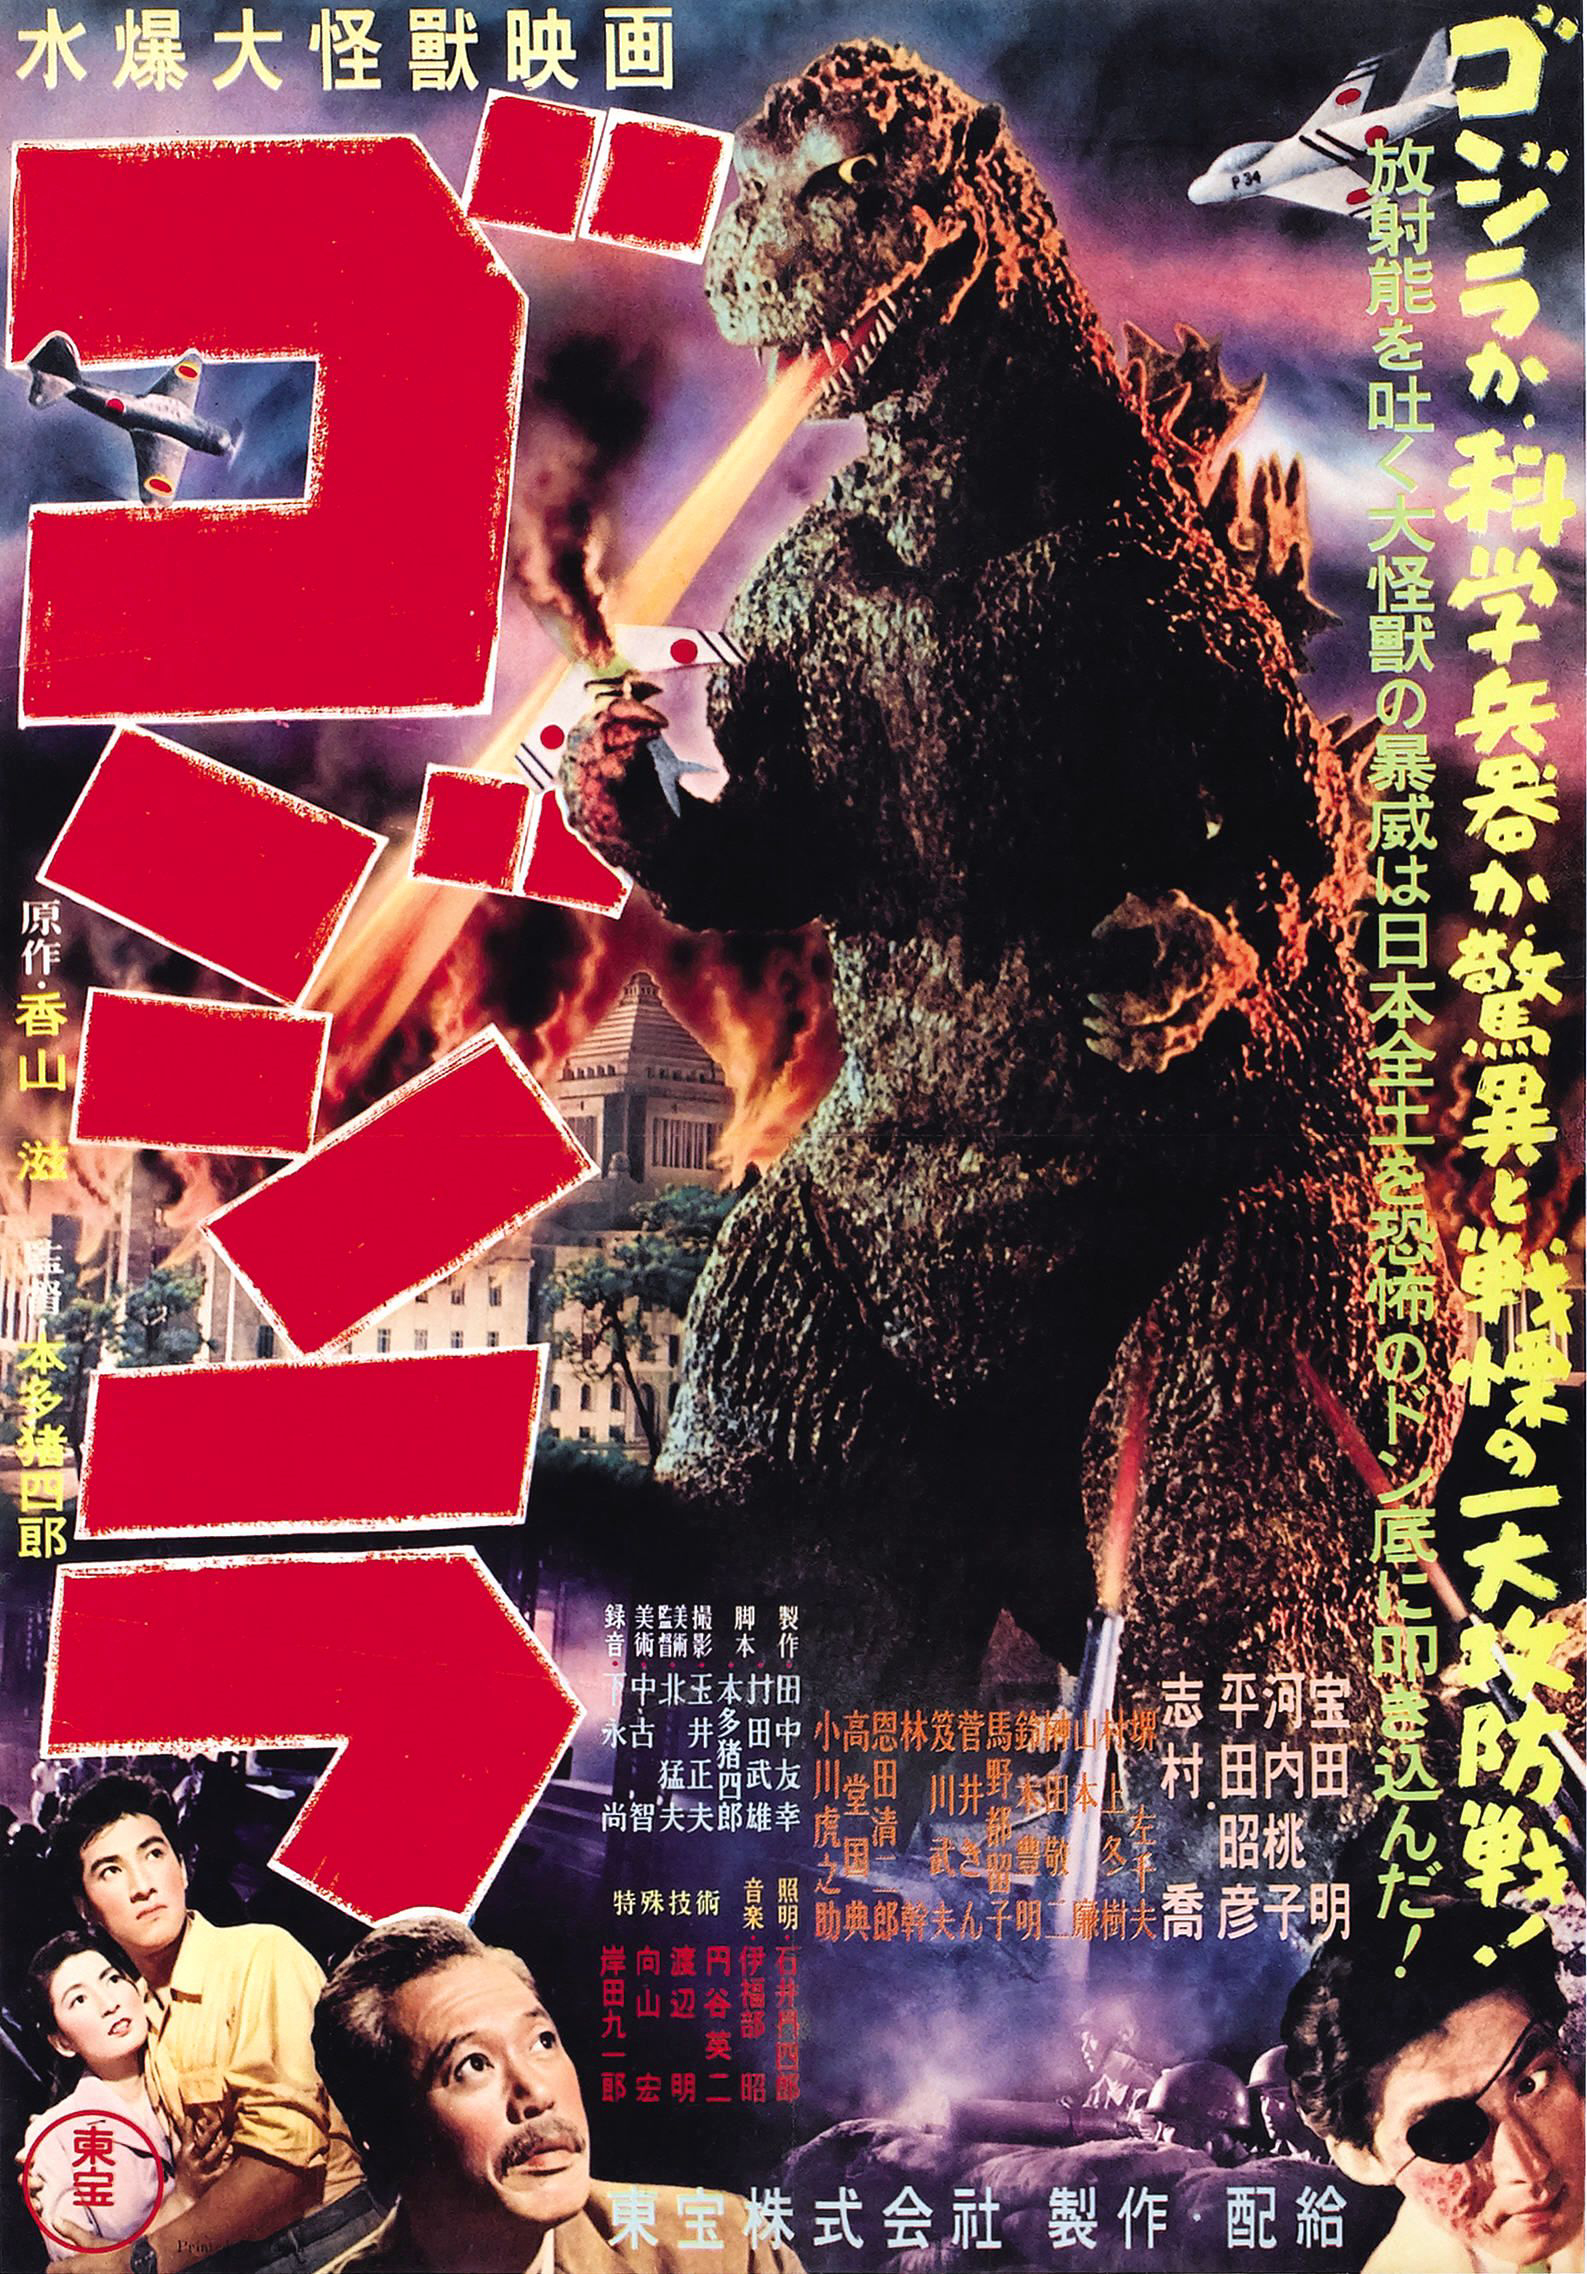 Poster Phim Godzilla (Godzilla)